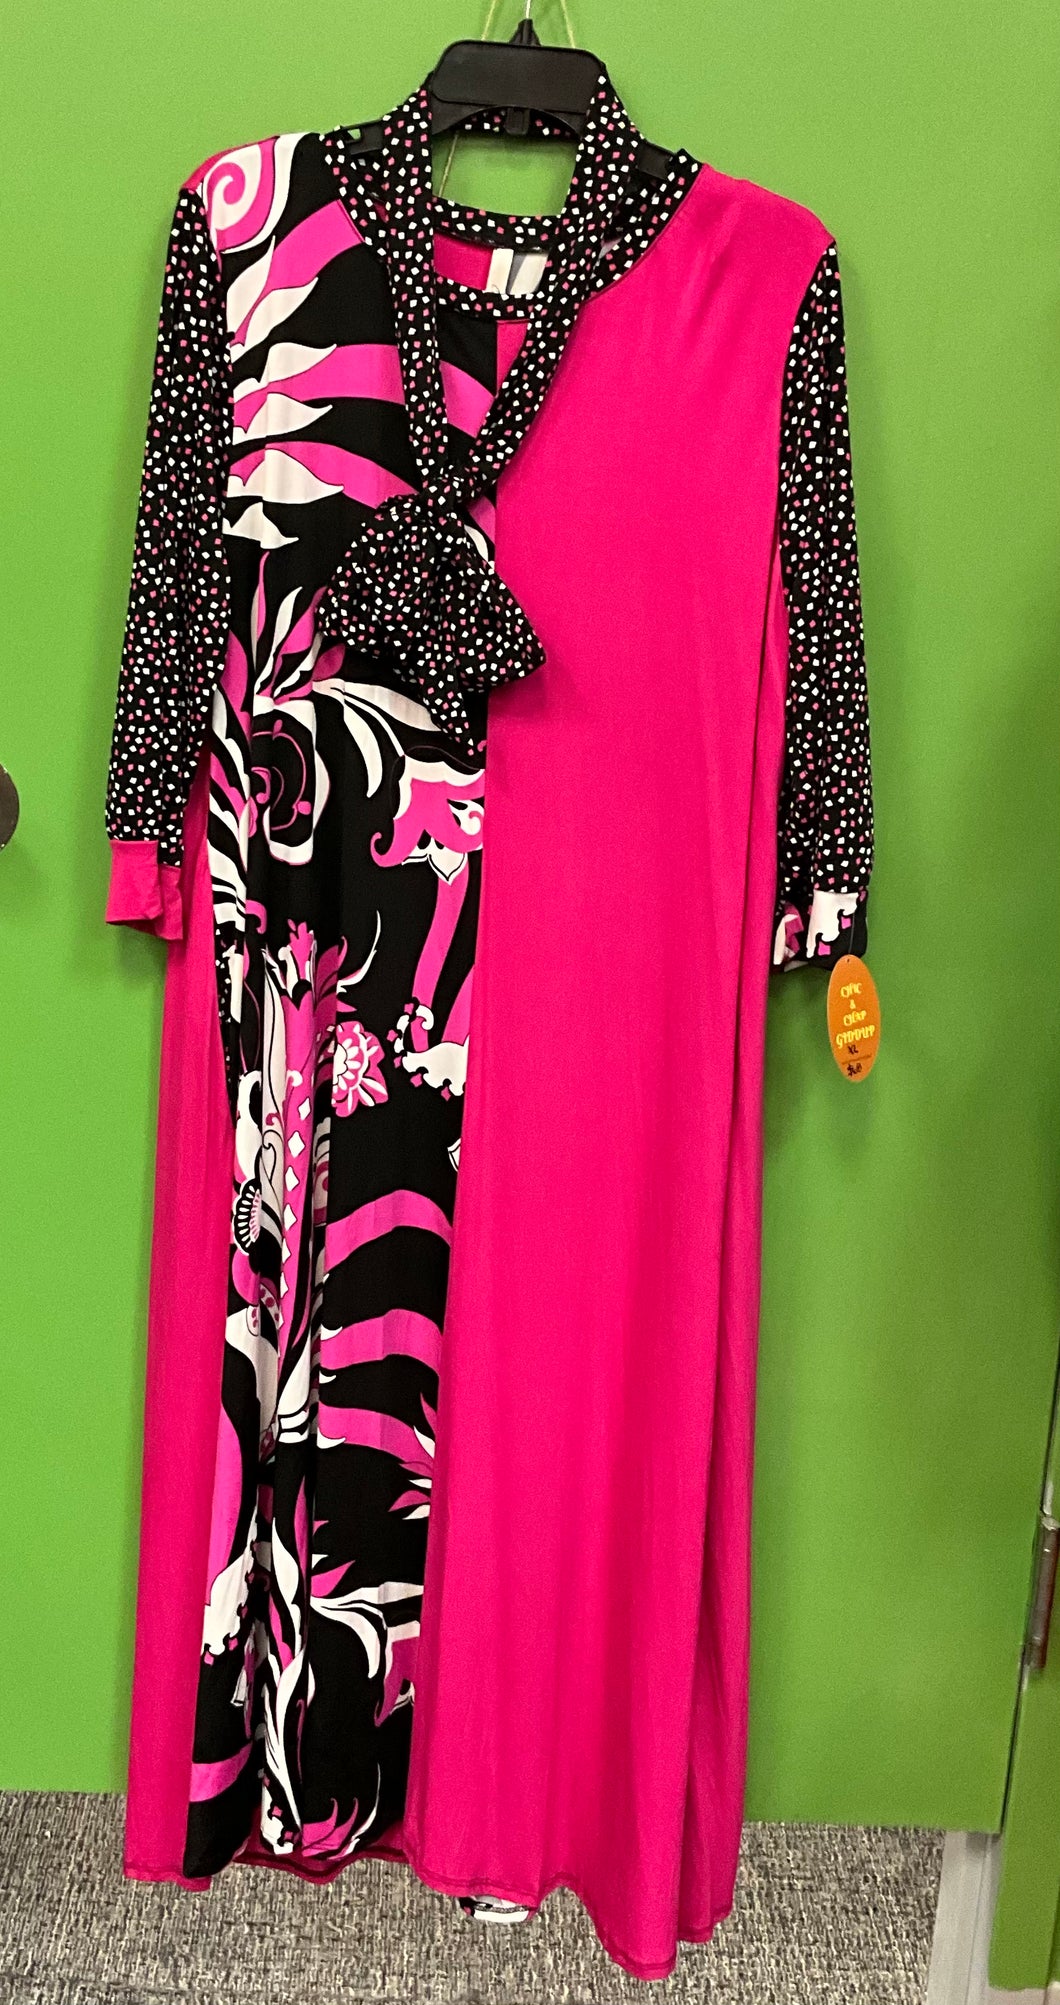 Pink / Black , White Design Dress With Neck or Belt Tie